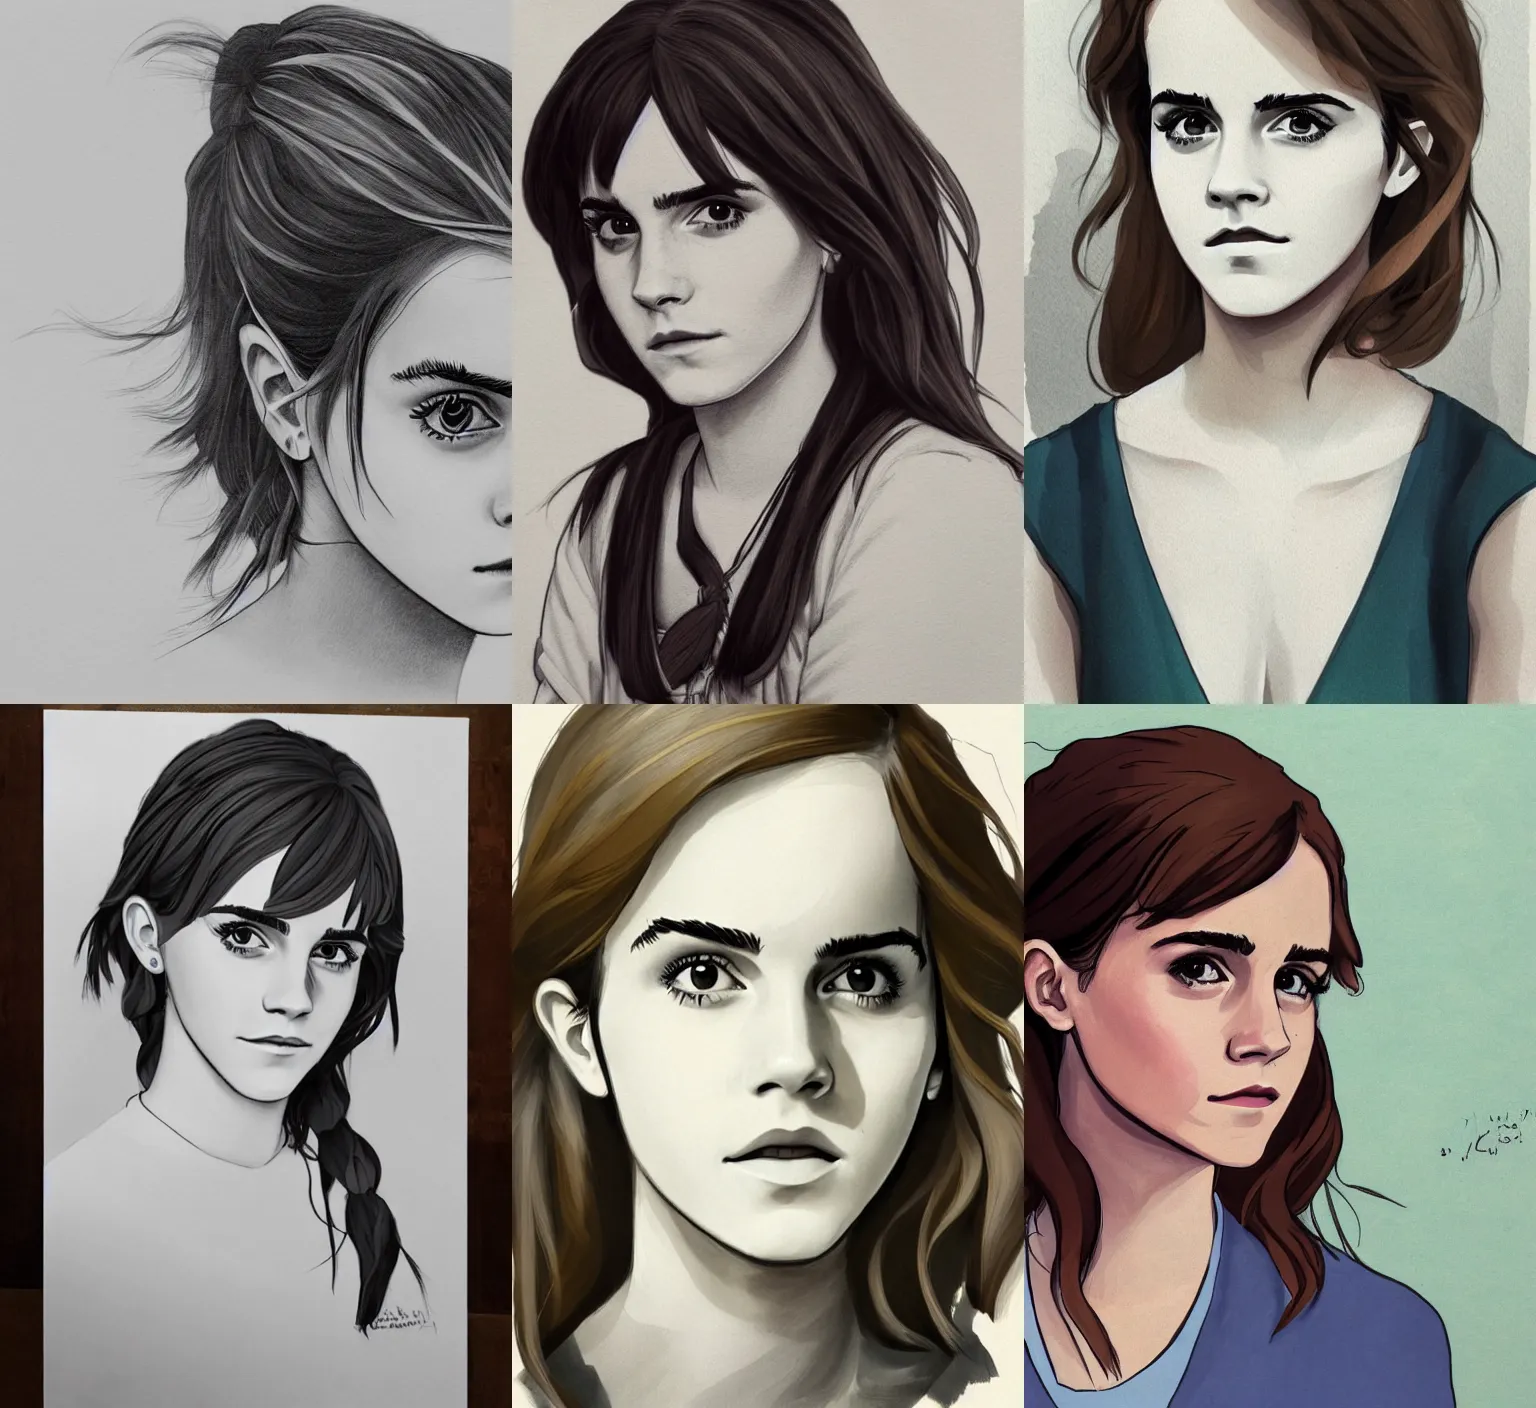 Prompt: medium shot, portrait of Emma Watson, art by Studio Ghibli